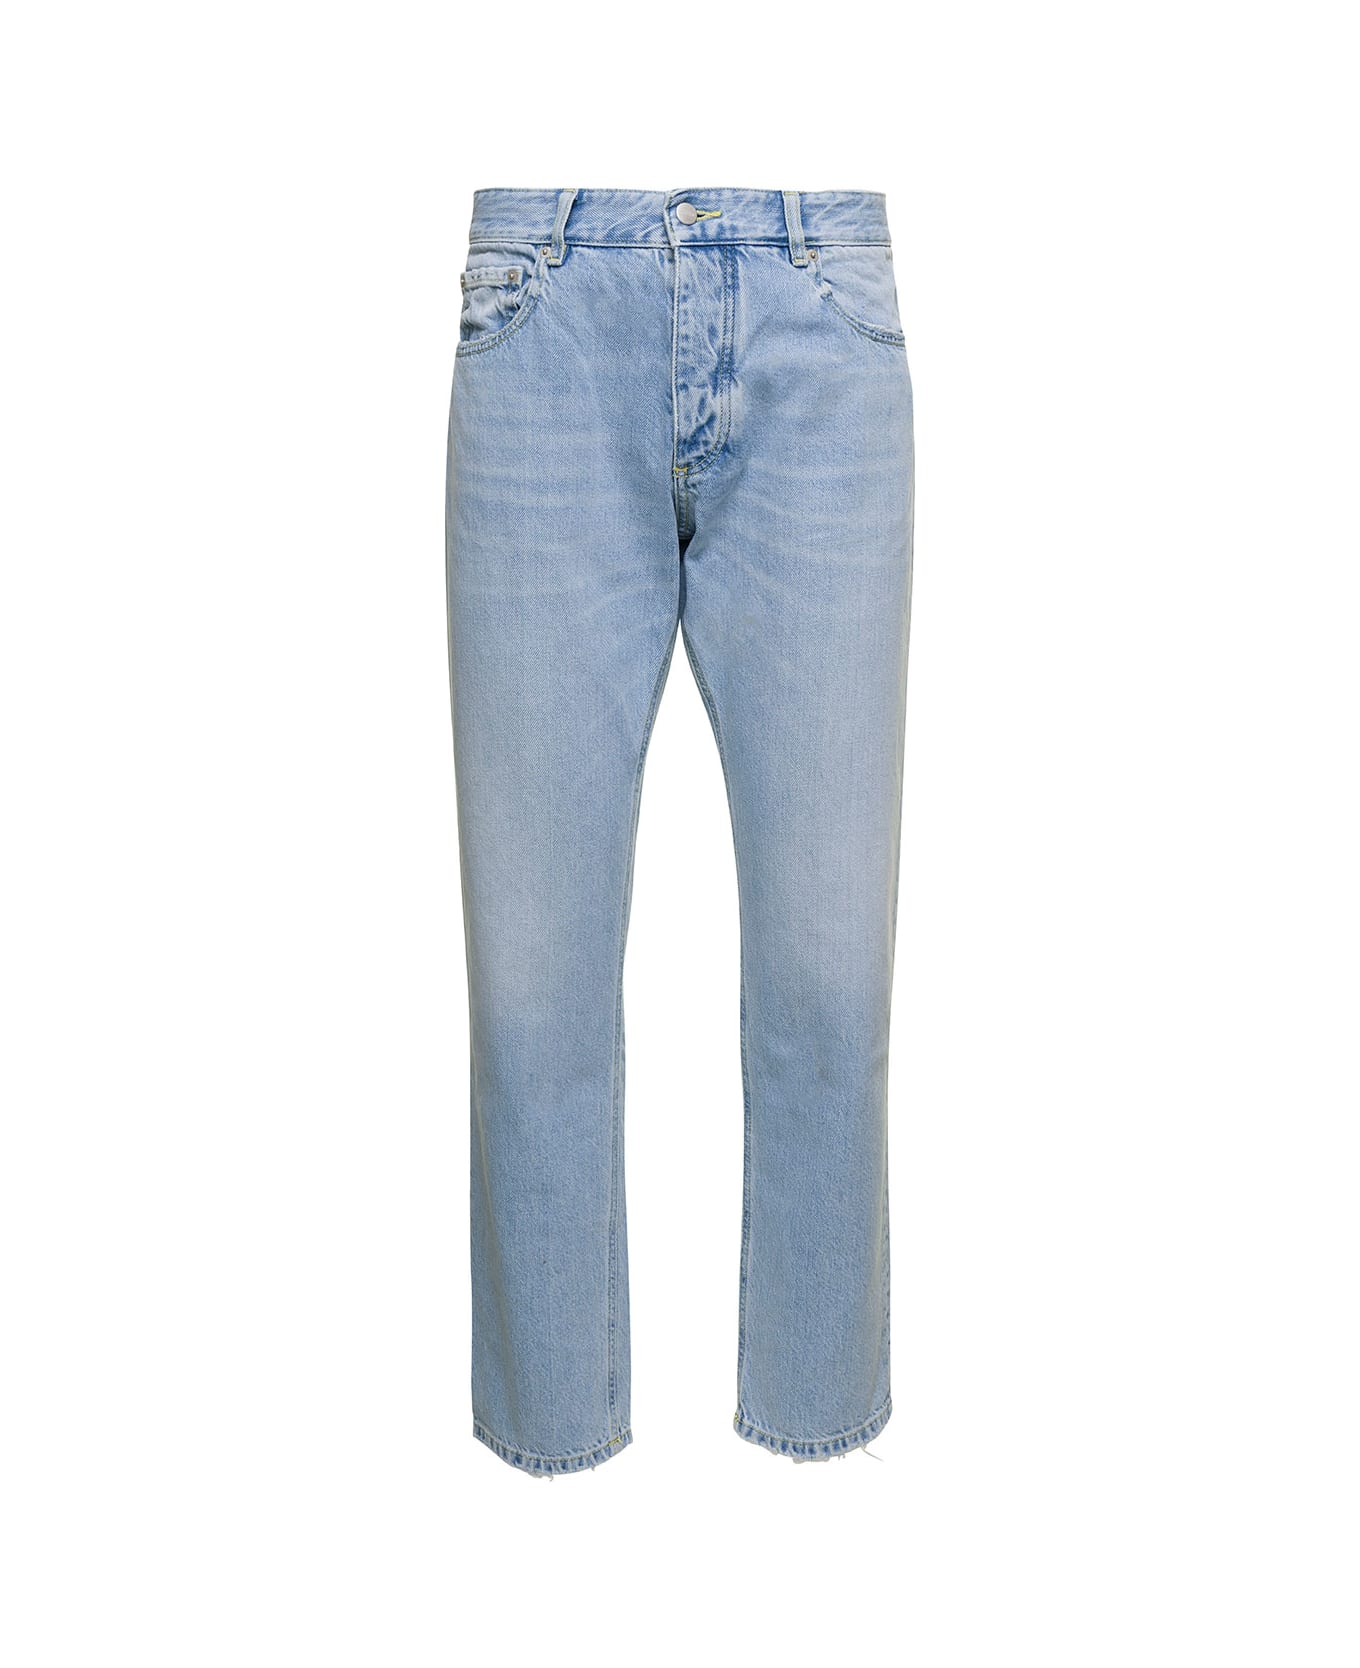 Icon Denim 'kanye' Light Blue 5-pocket Jeans With Logo Patch In Cotton Denim Man - Light blue